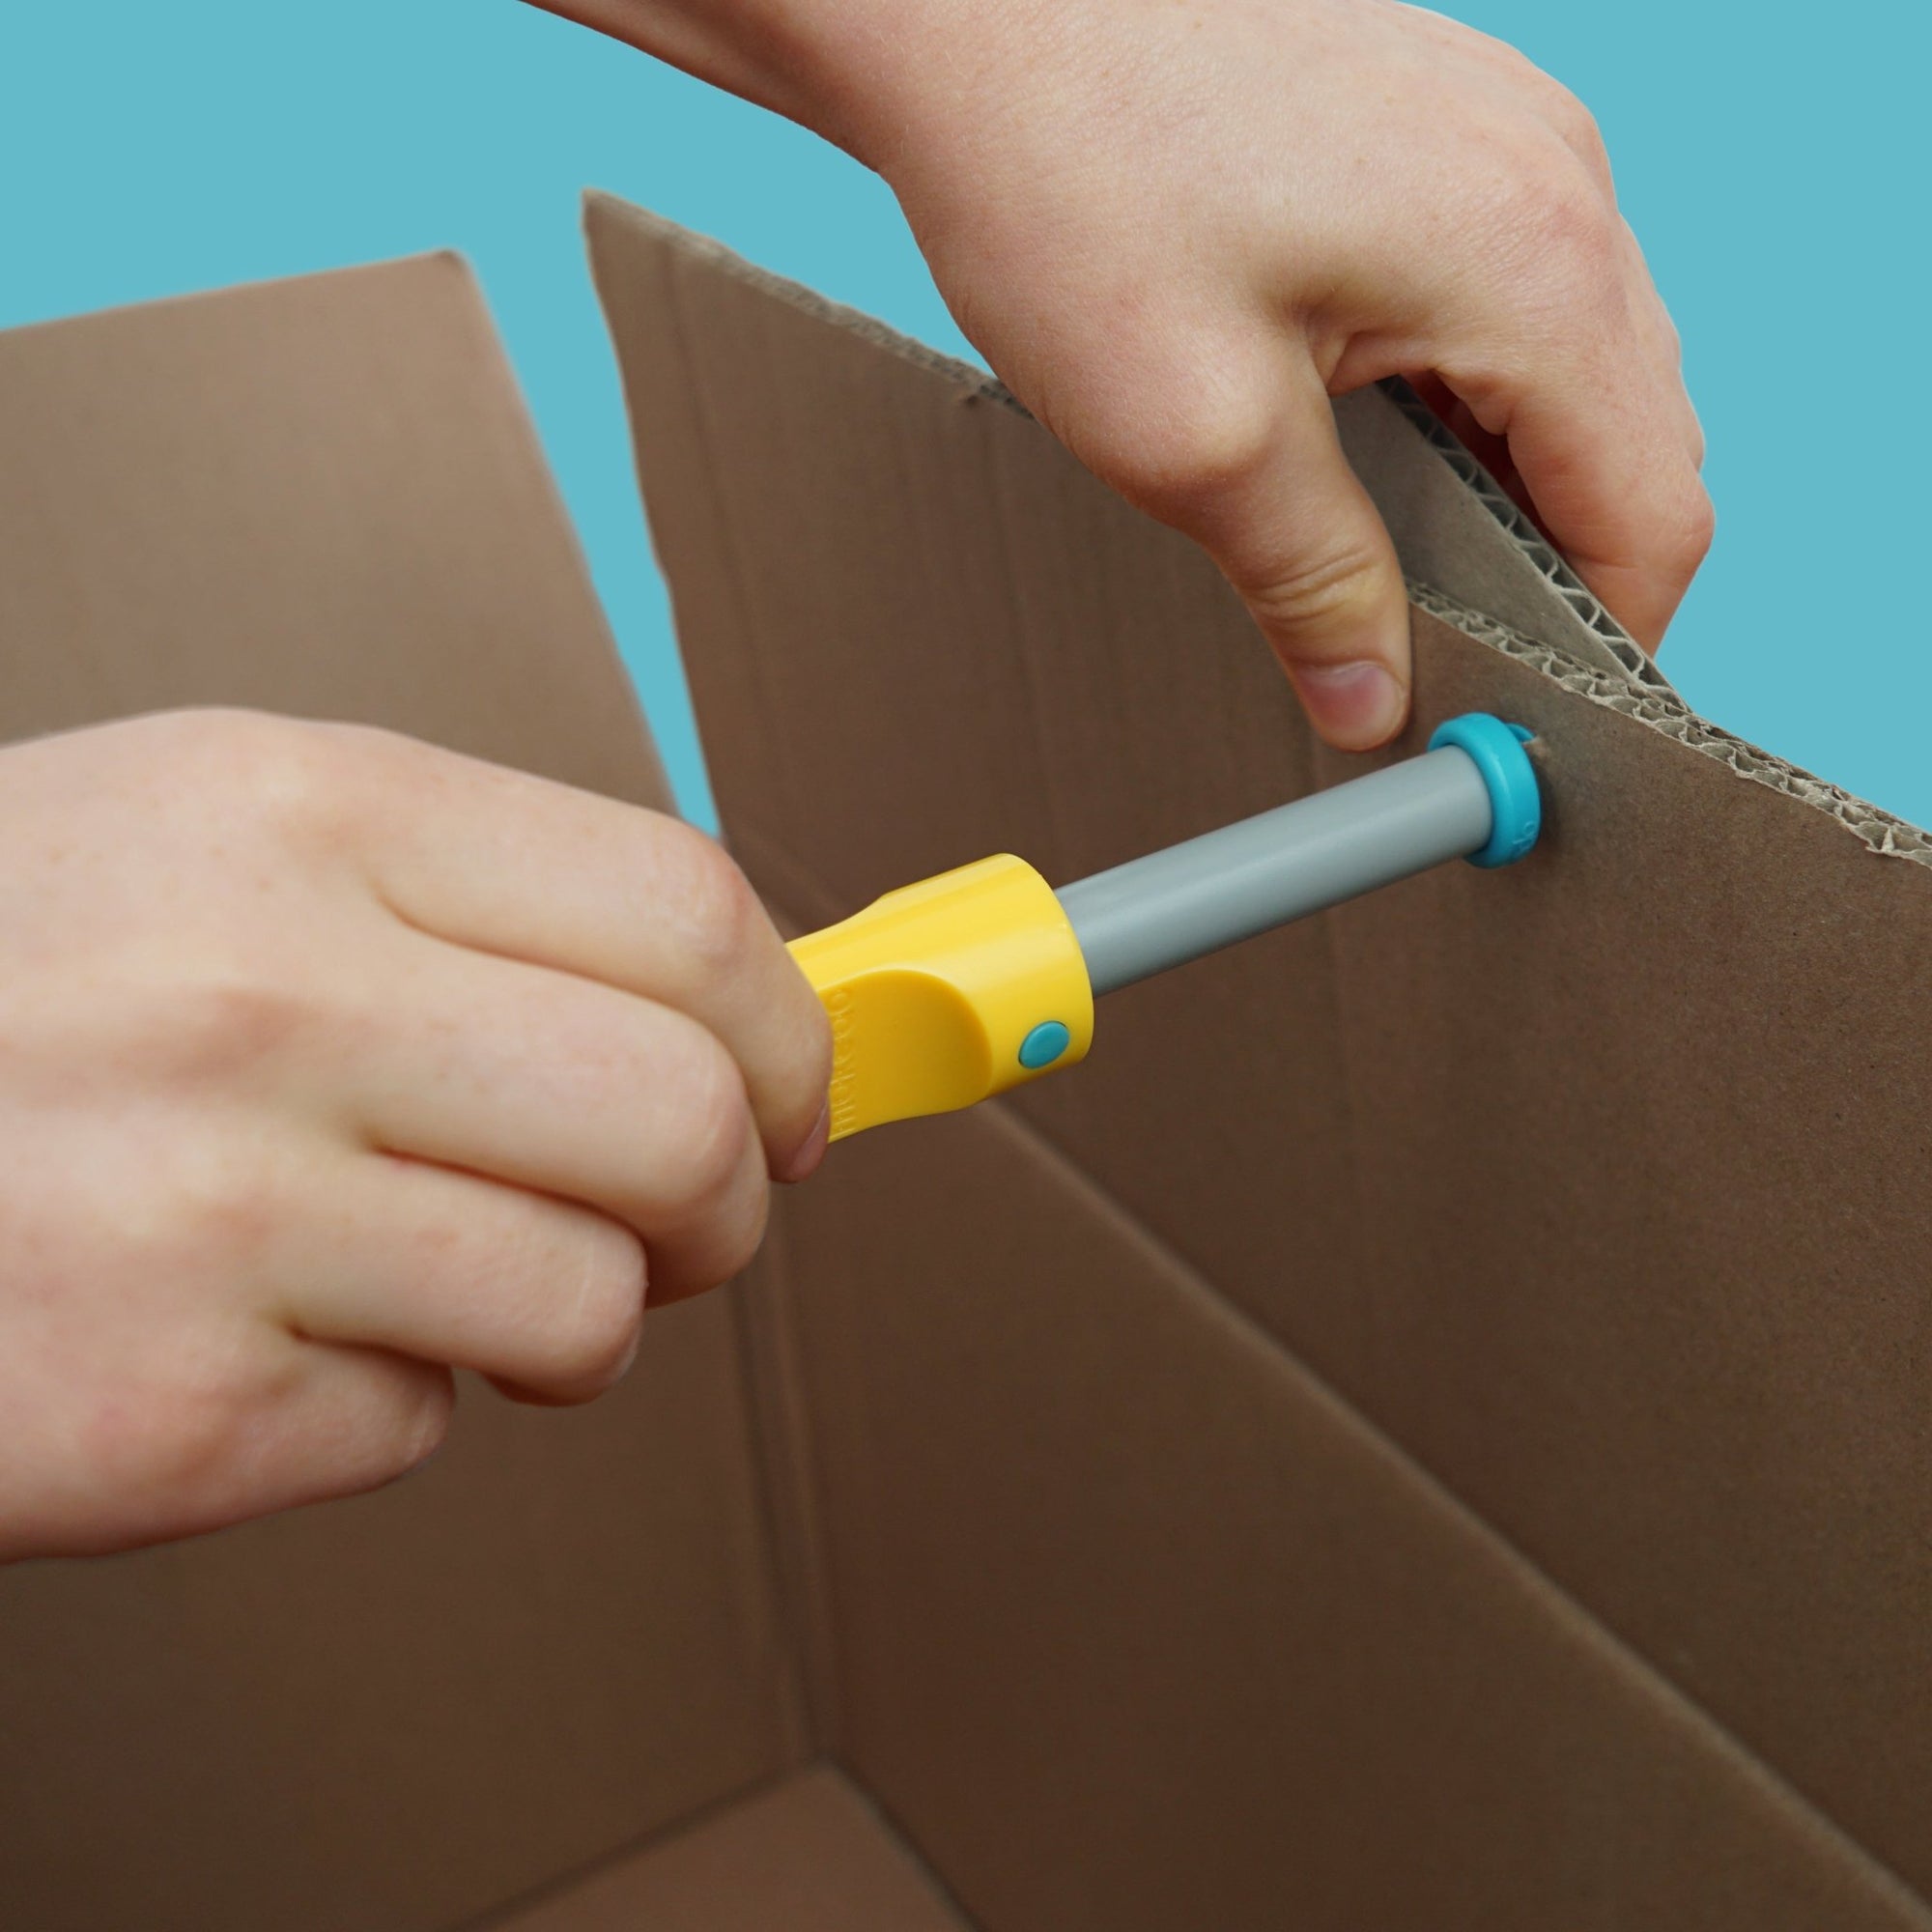  Makedo Invent  Upcycled Cardboard Construction